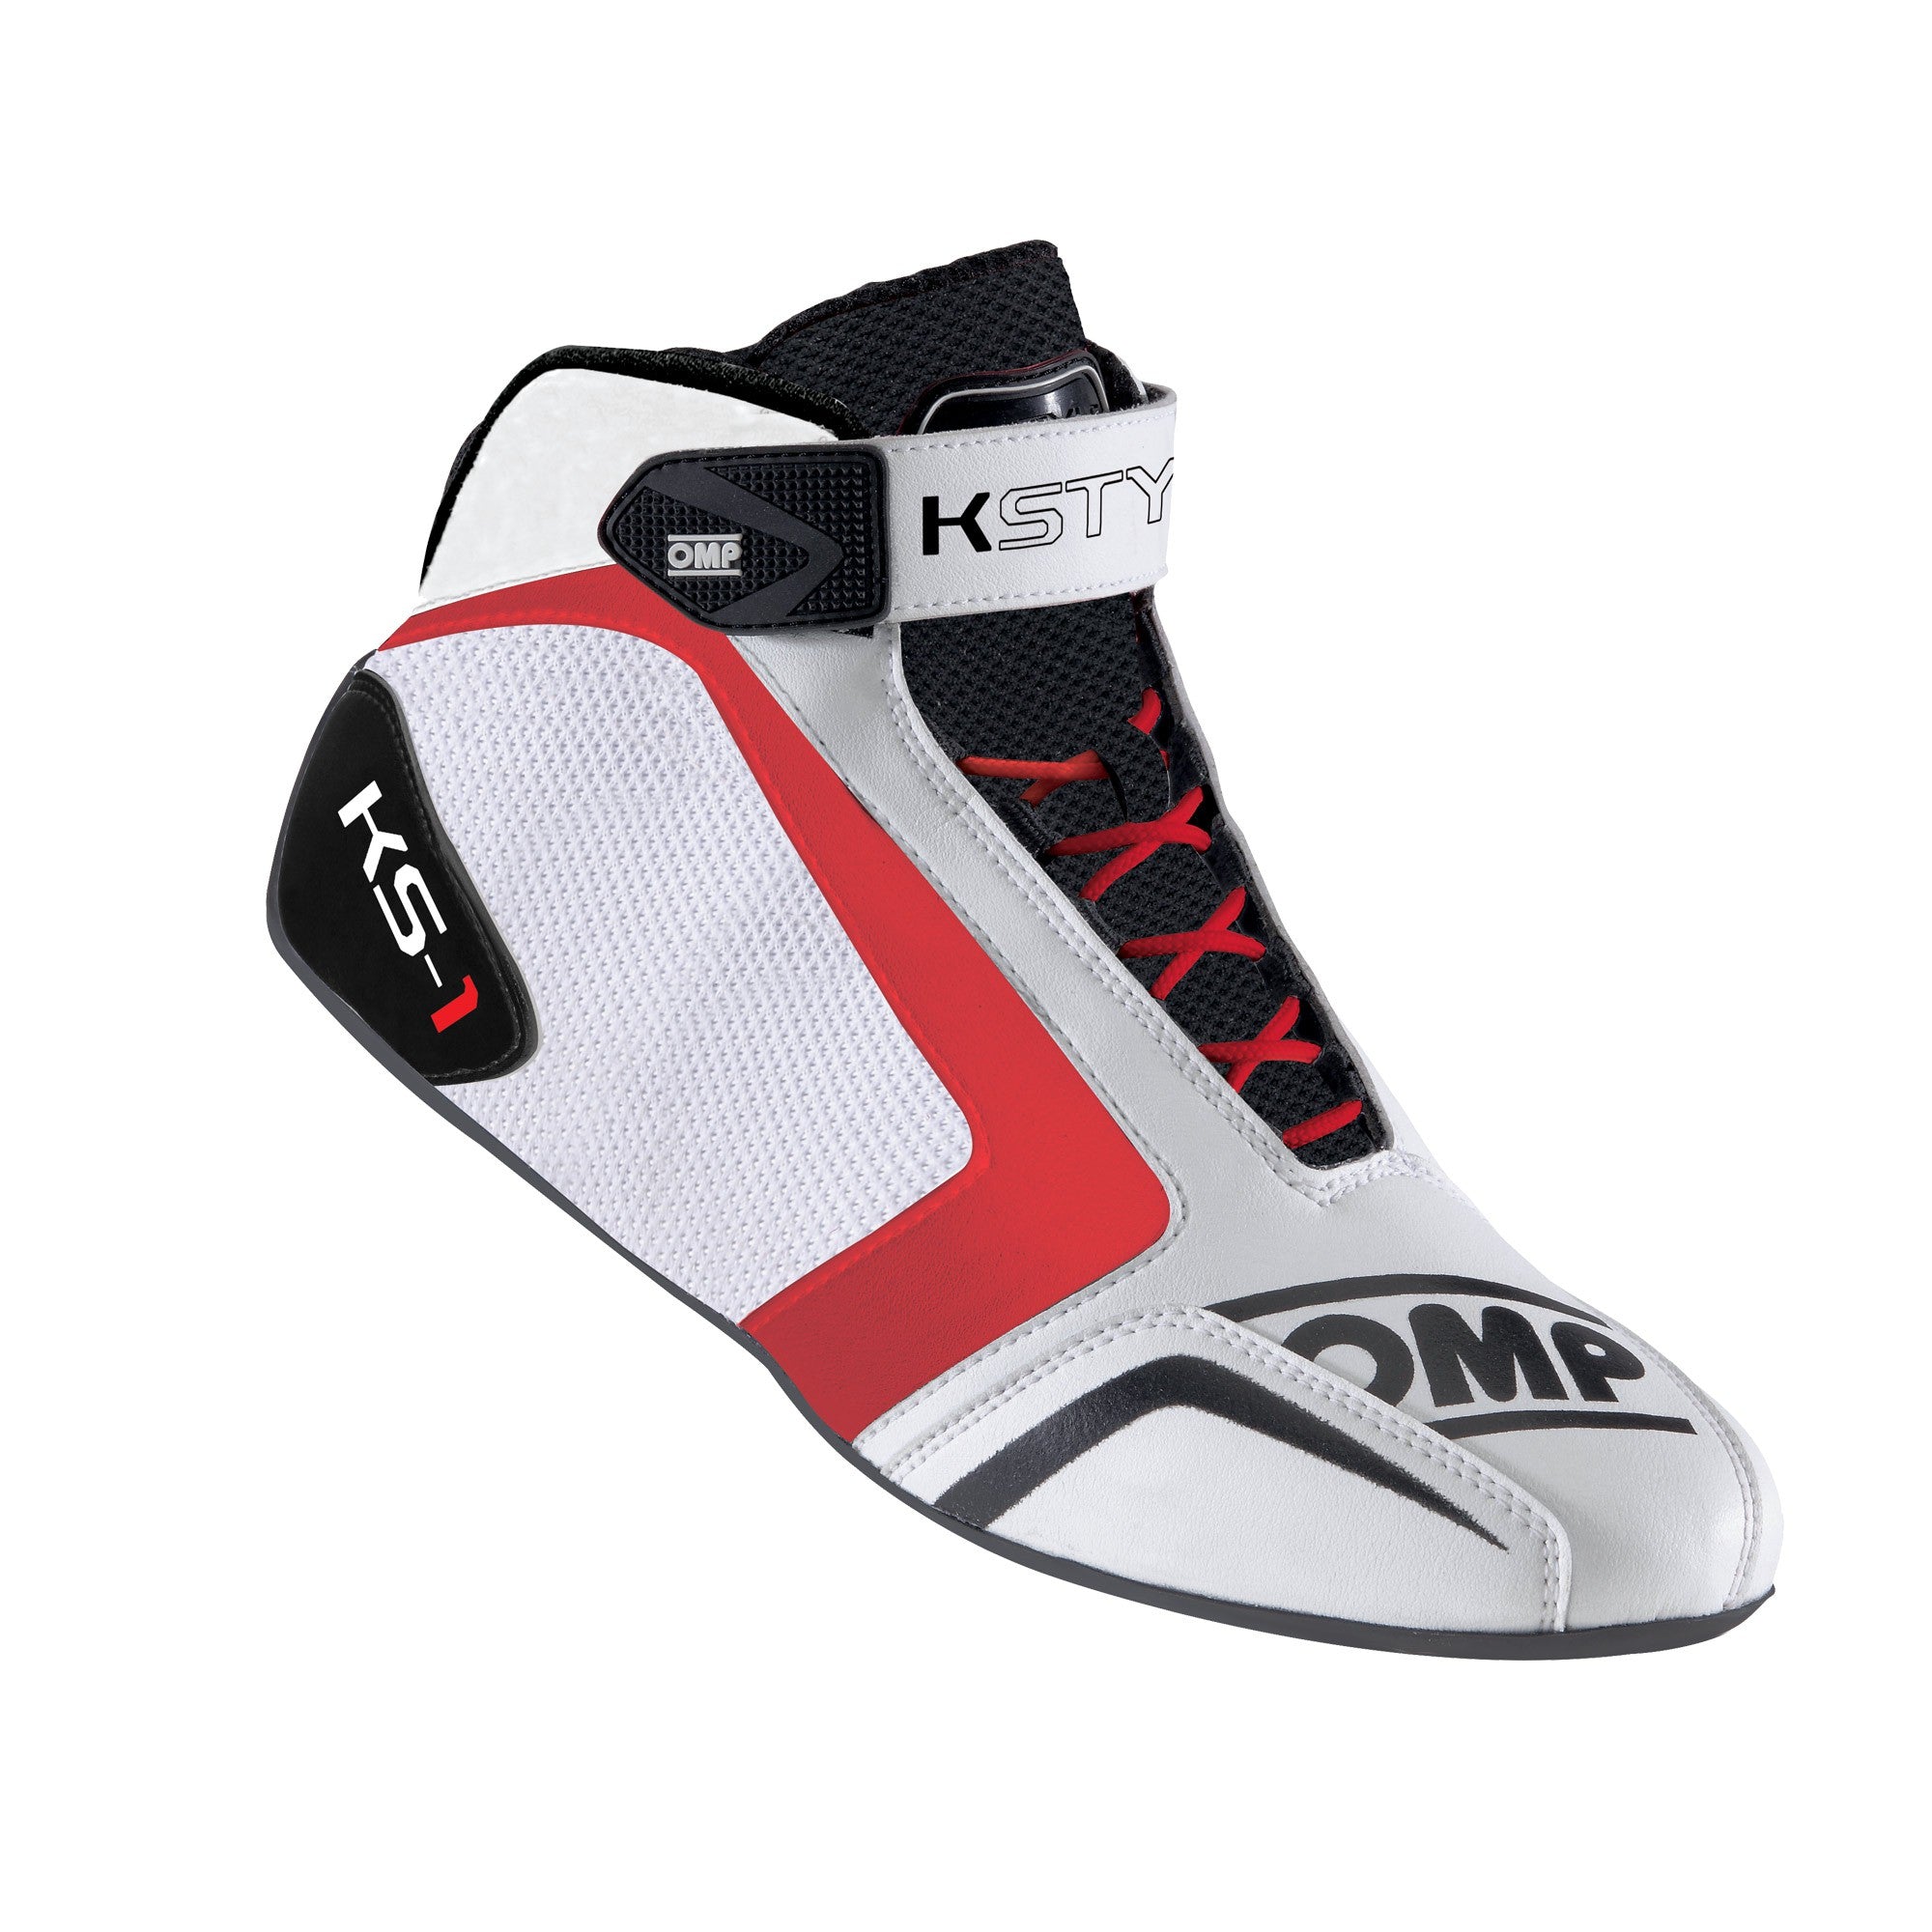 OMP KC0-0815-A01-120-47 (IC/81512047) Kart shoes KS-1, white/black/red, size 47 Photo-0 